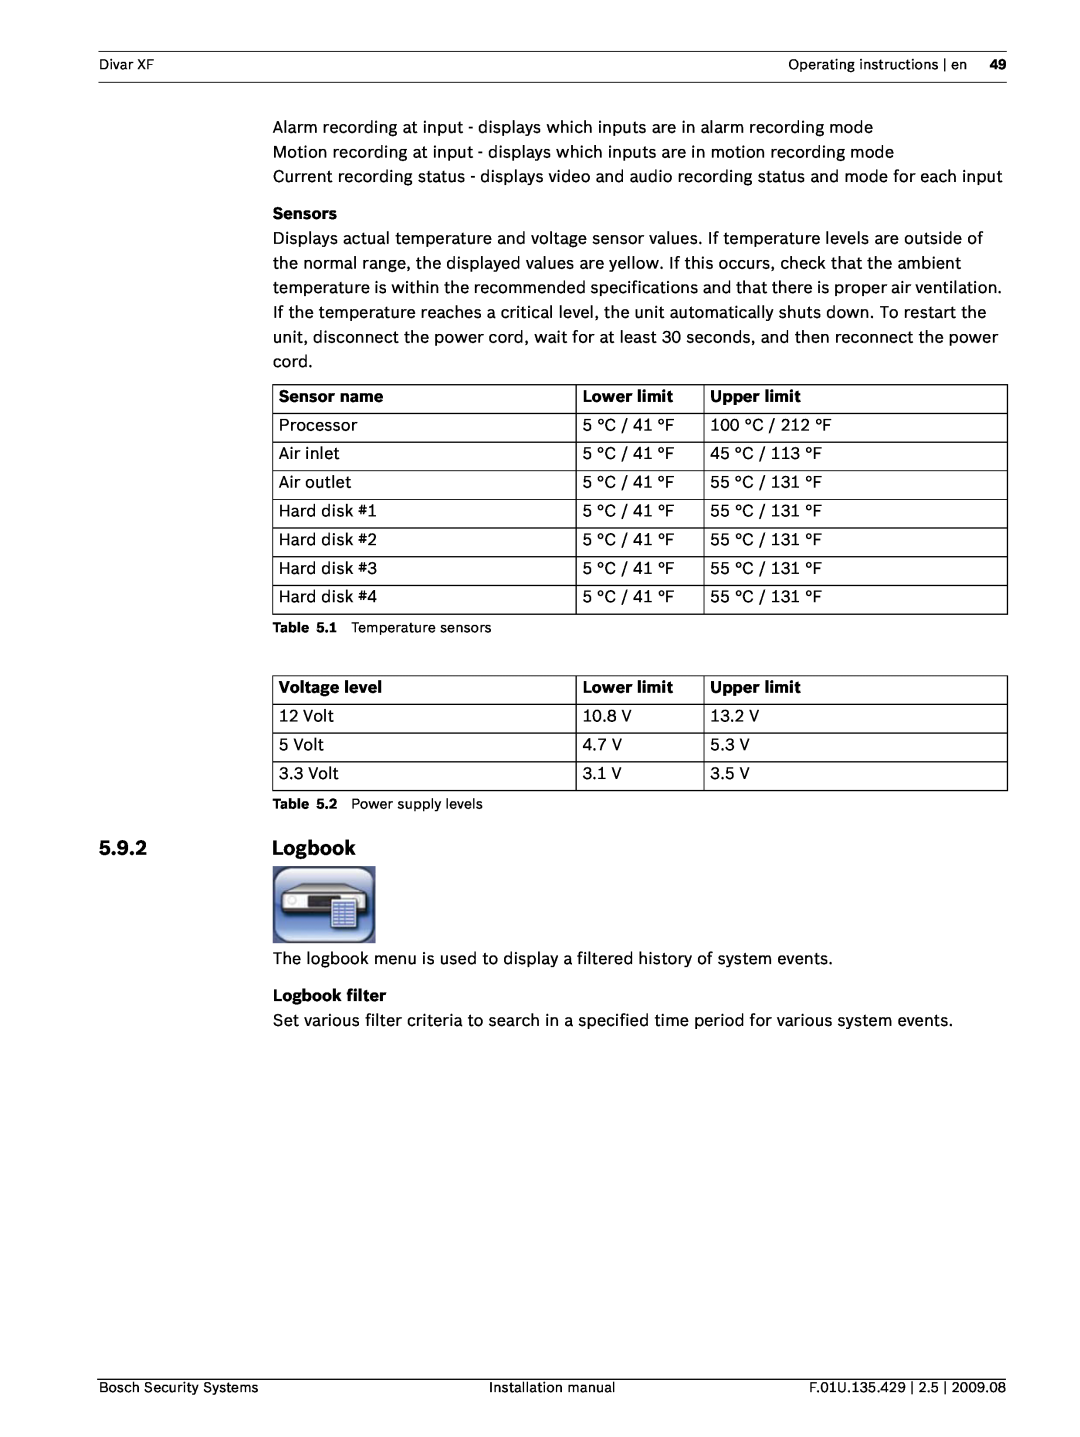 Bosch Appliances XF 5.9.2Logbook, Sensors, Sensor name, Lower limit, Upper limit, Voltage level, Logbook filter 